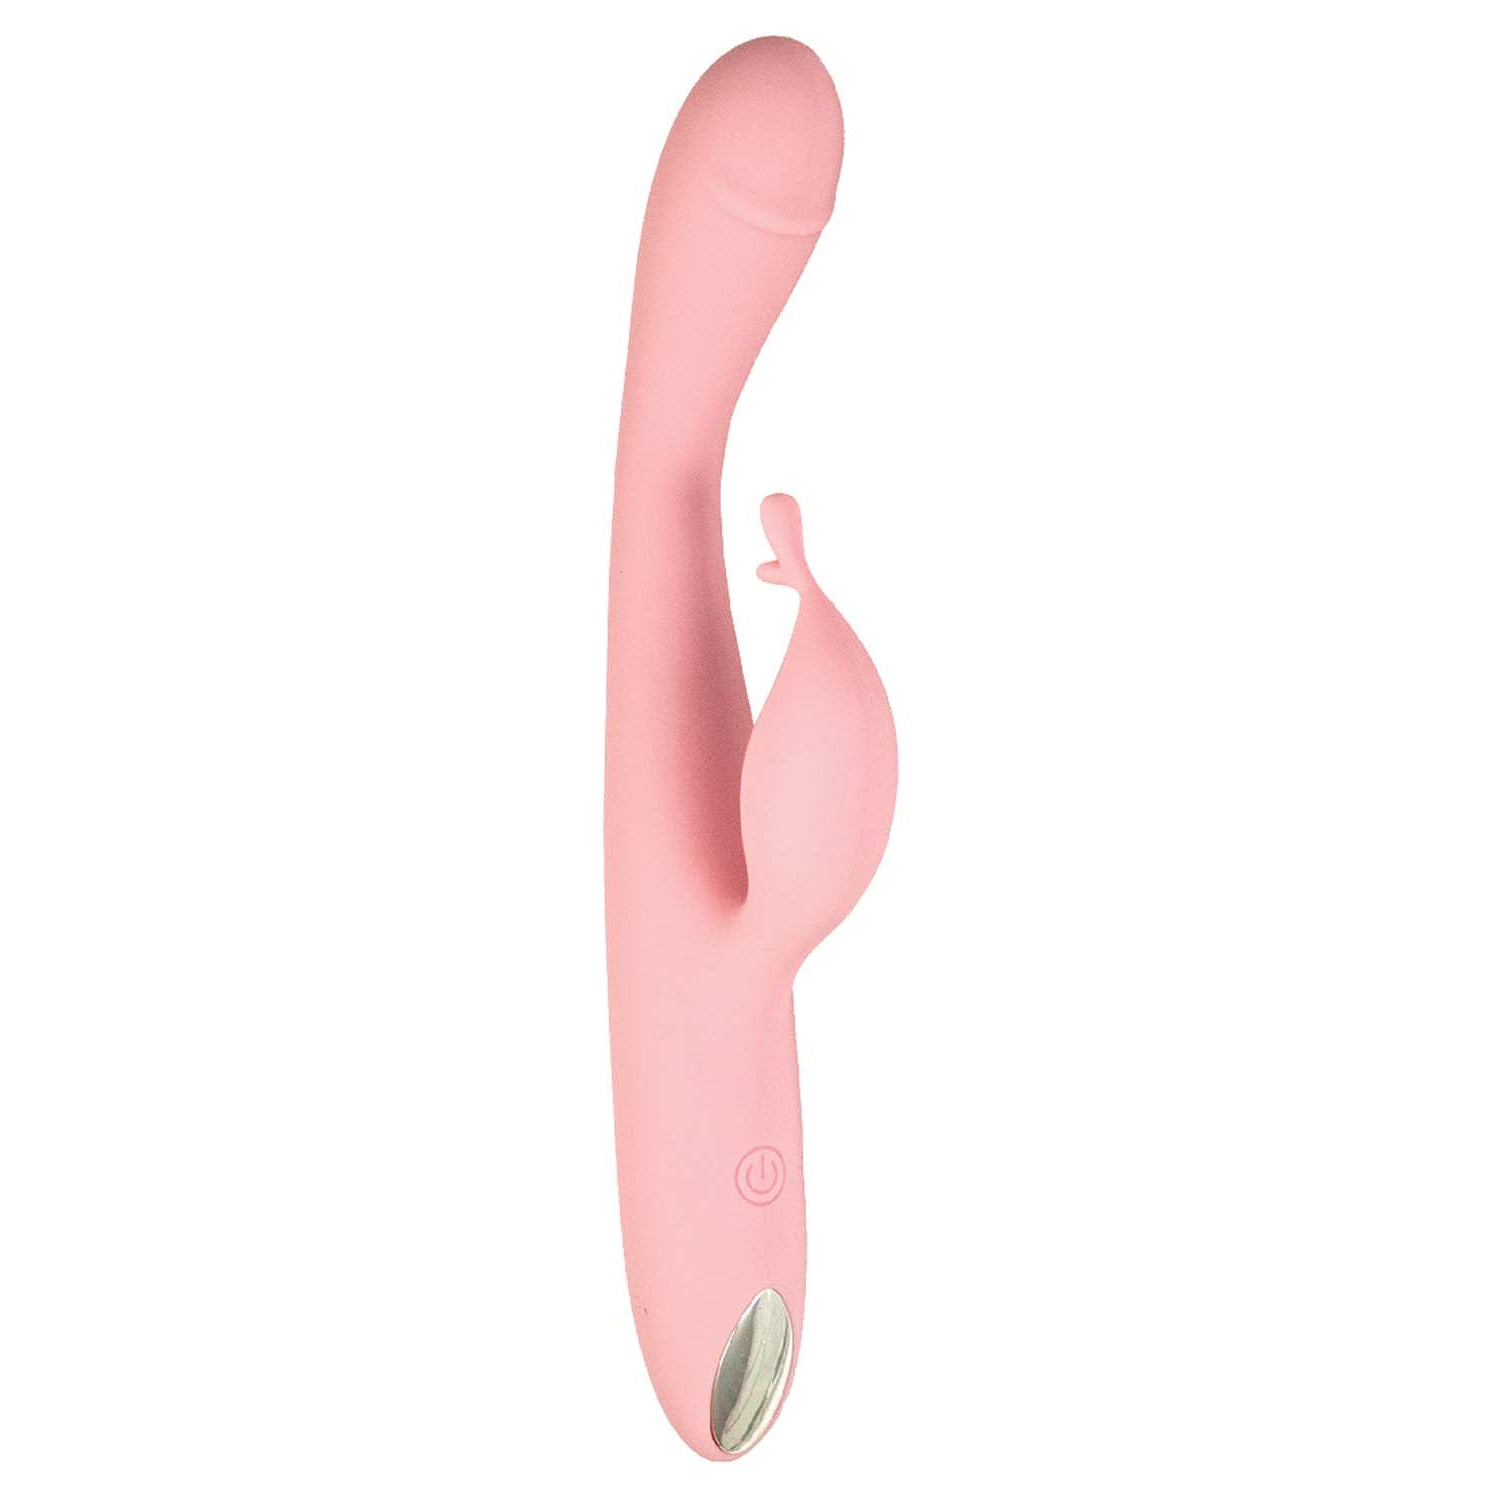 Princess Petite Pleaser Rabbit Vibrator - Pink